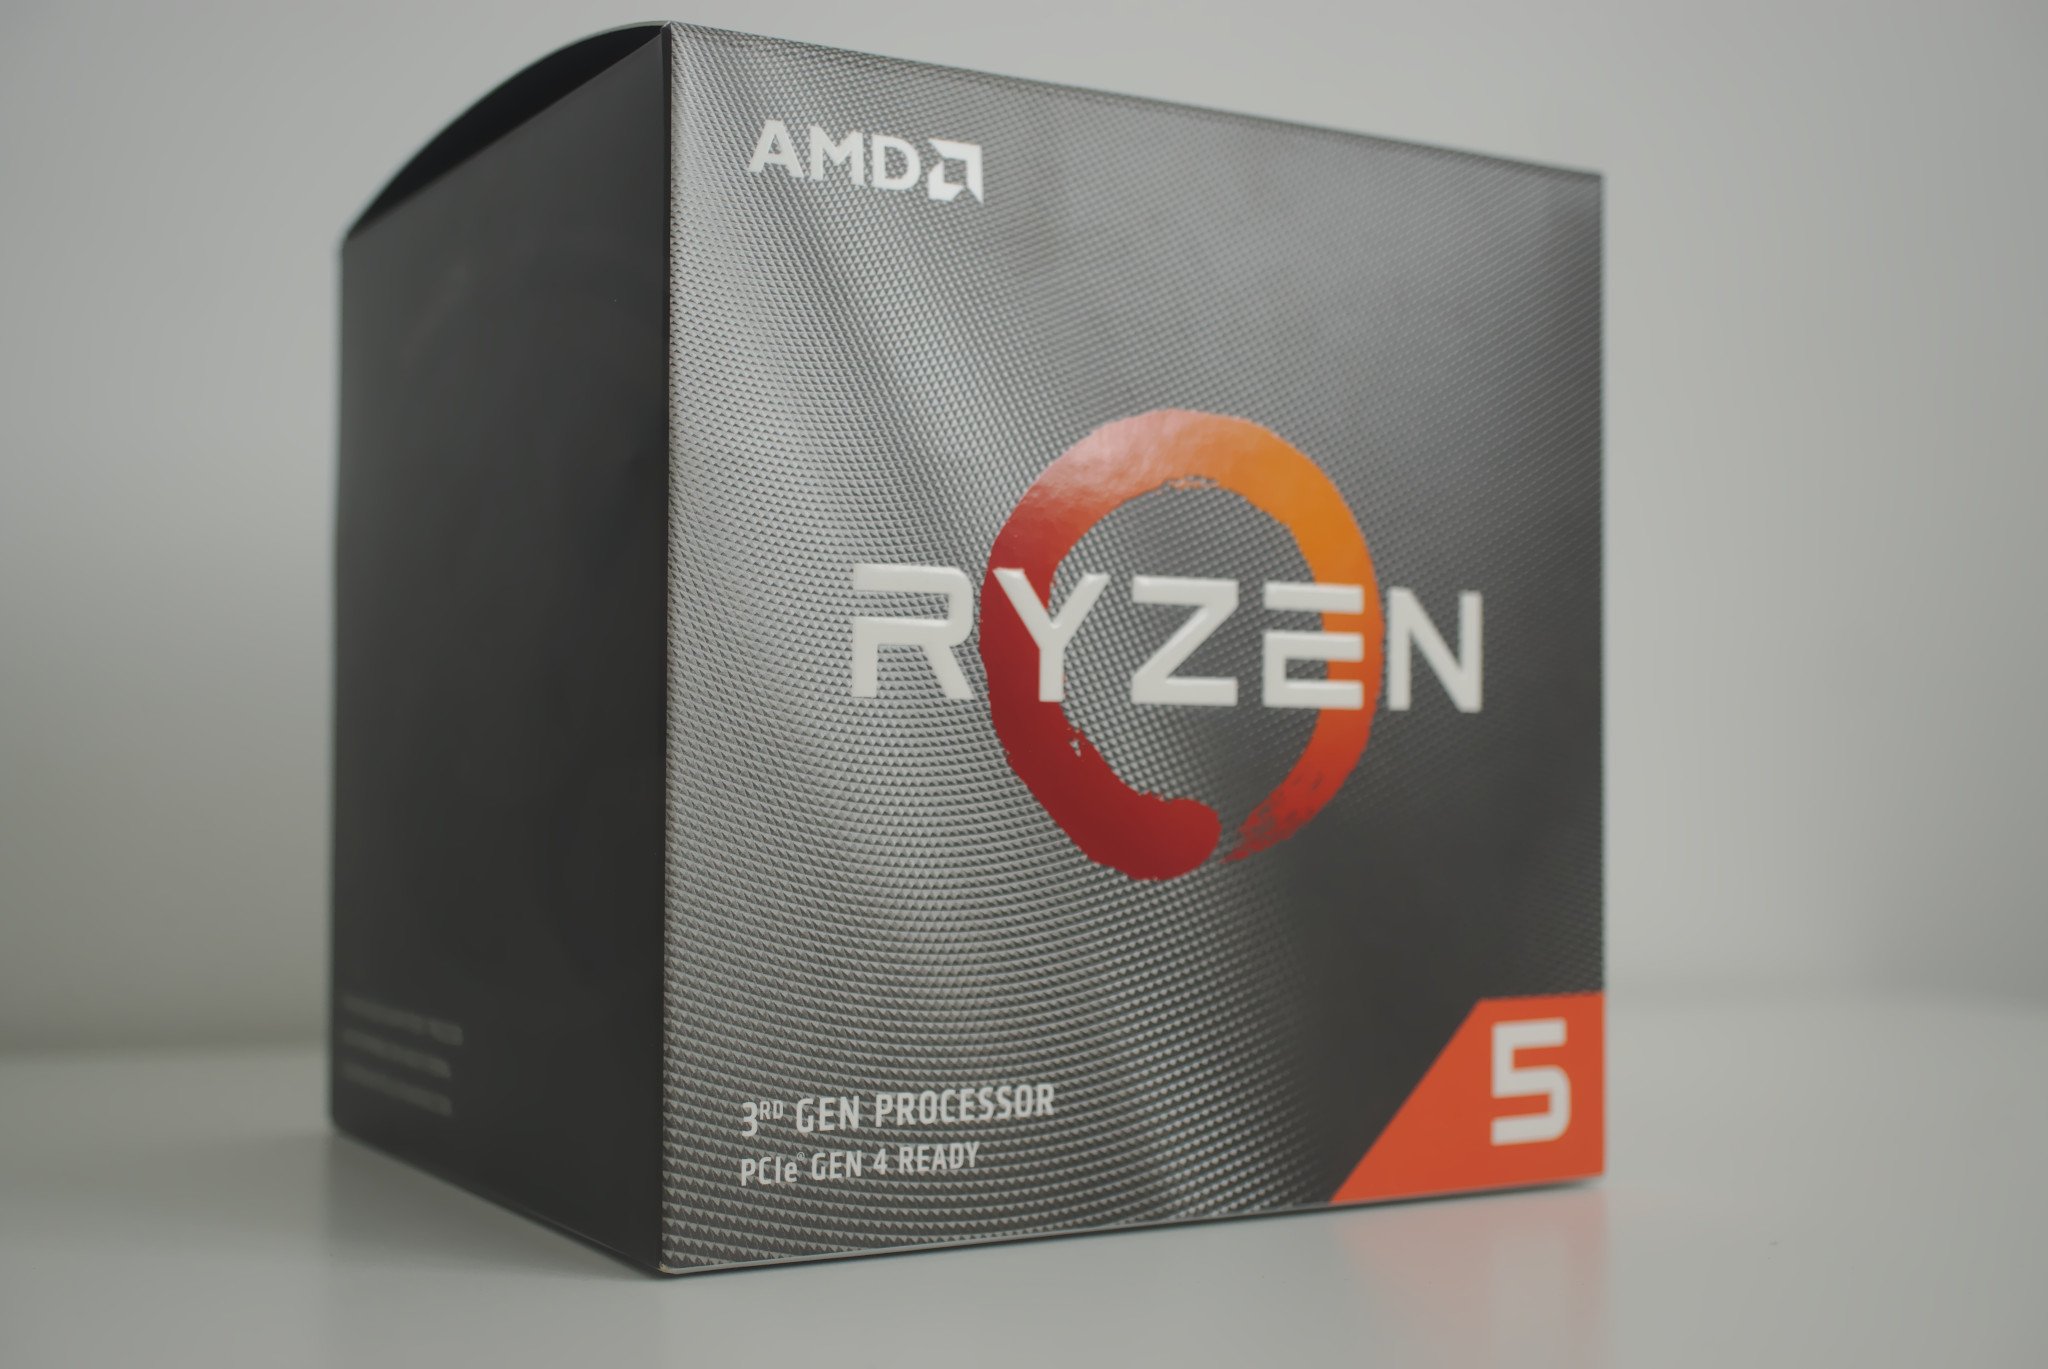 AMD Ryzen 5 3600X review The new best midrange CPU  Windows Central